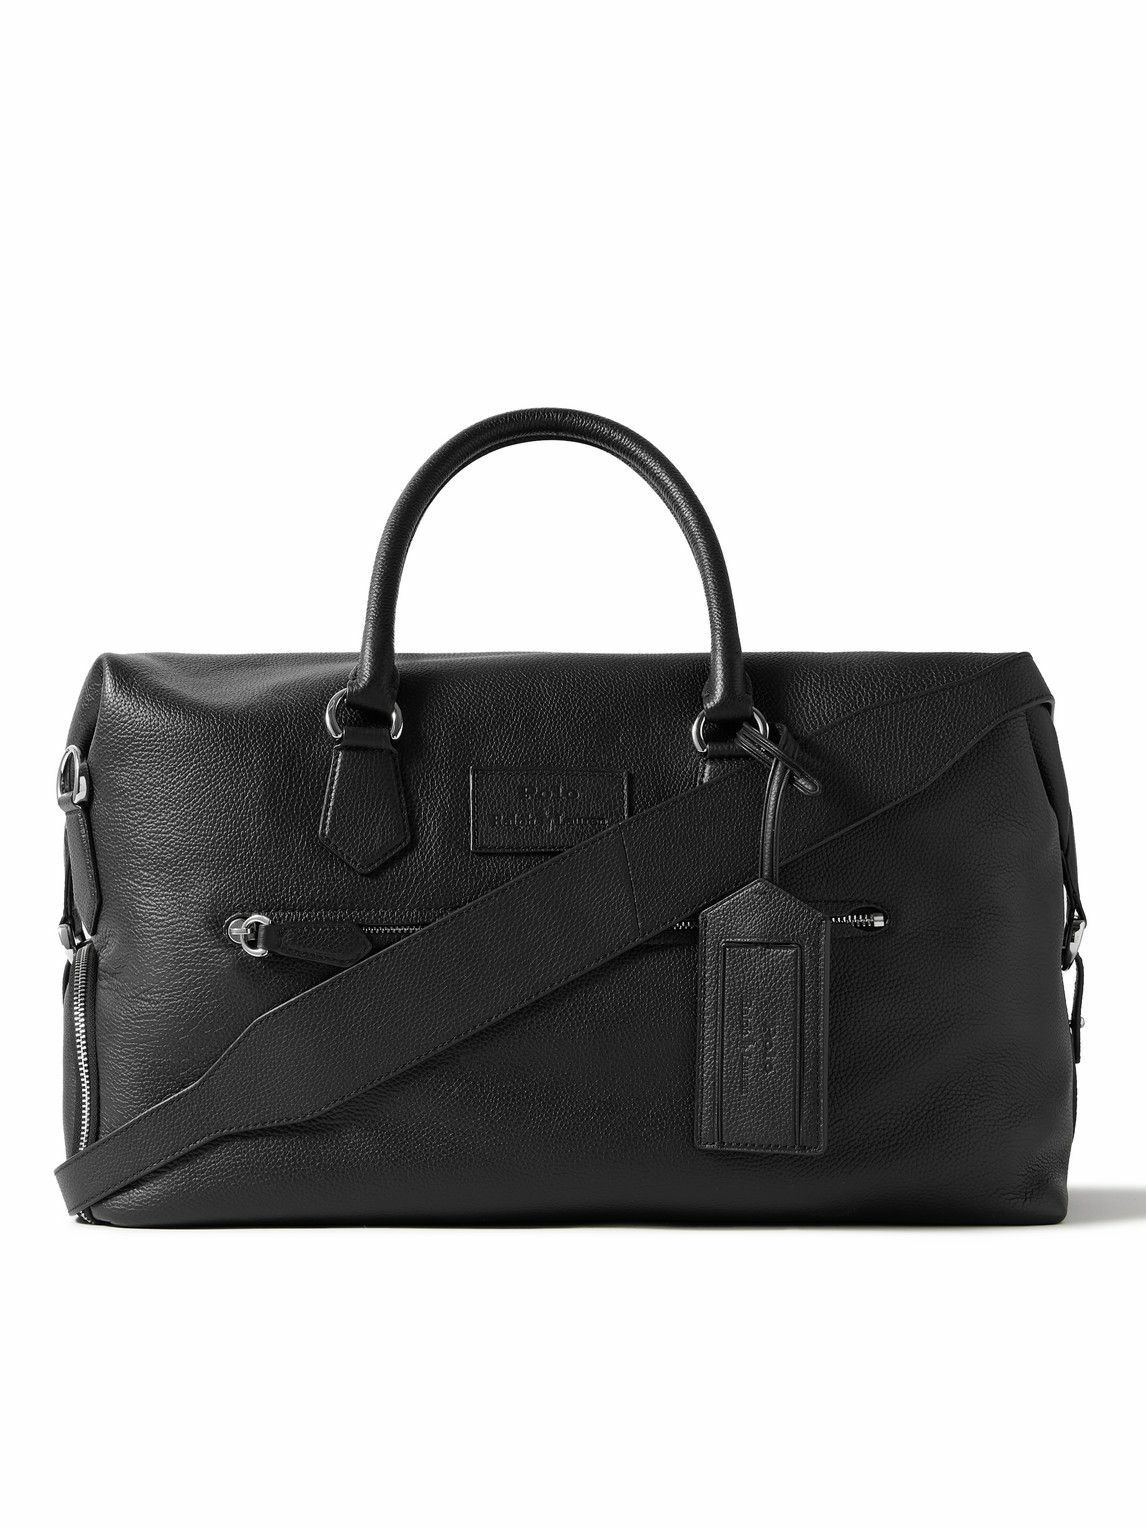 Photo: Polo Ralph Lauren - Large Full-Grain Leather Duffle Bag